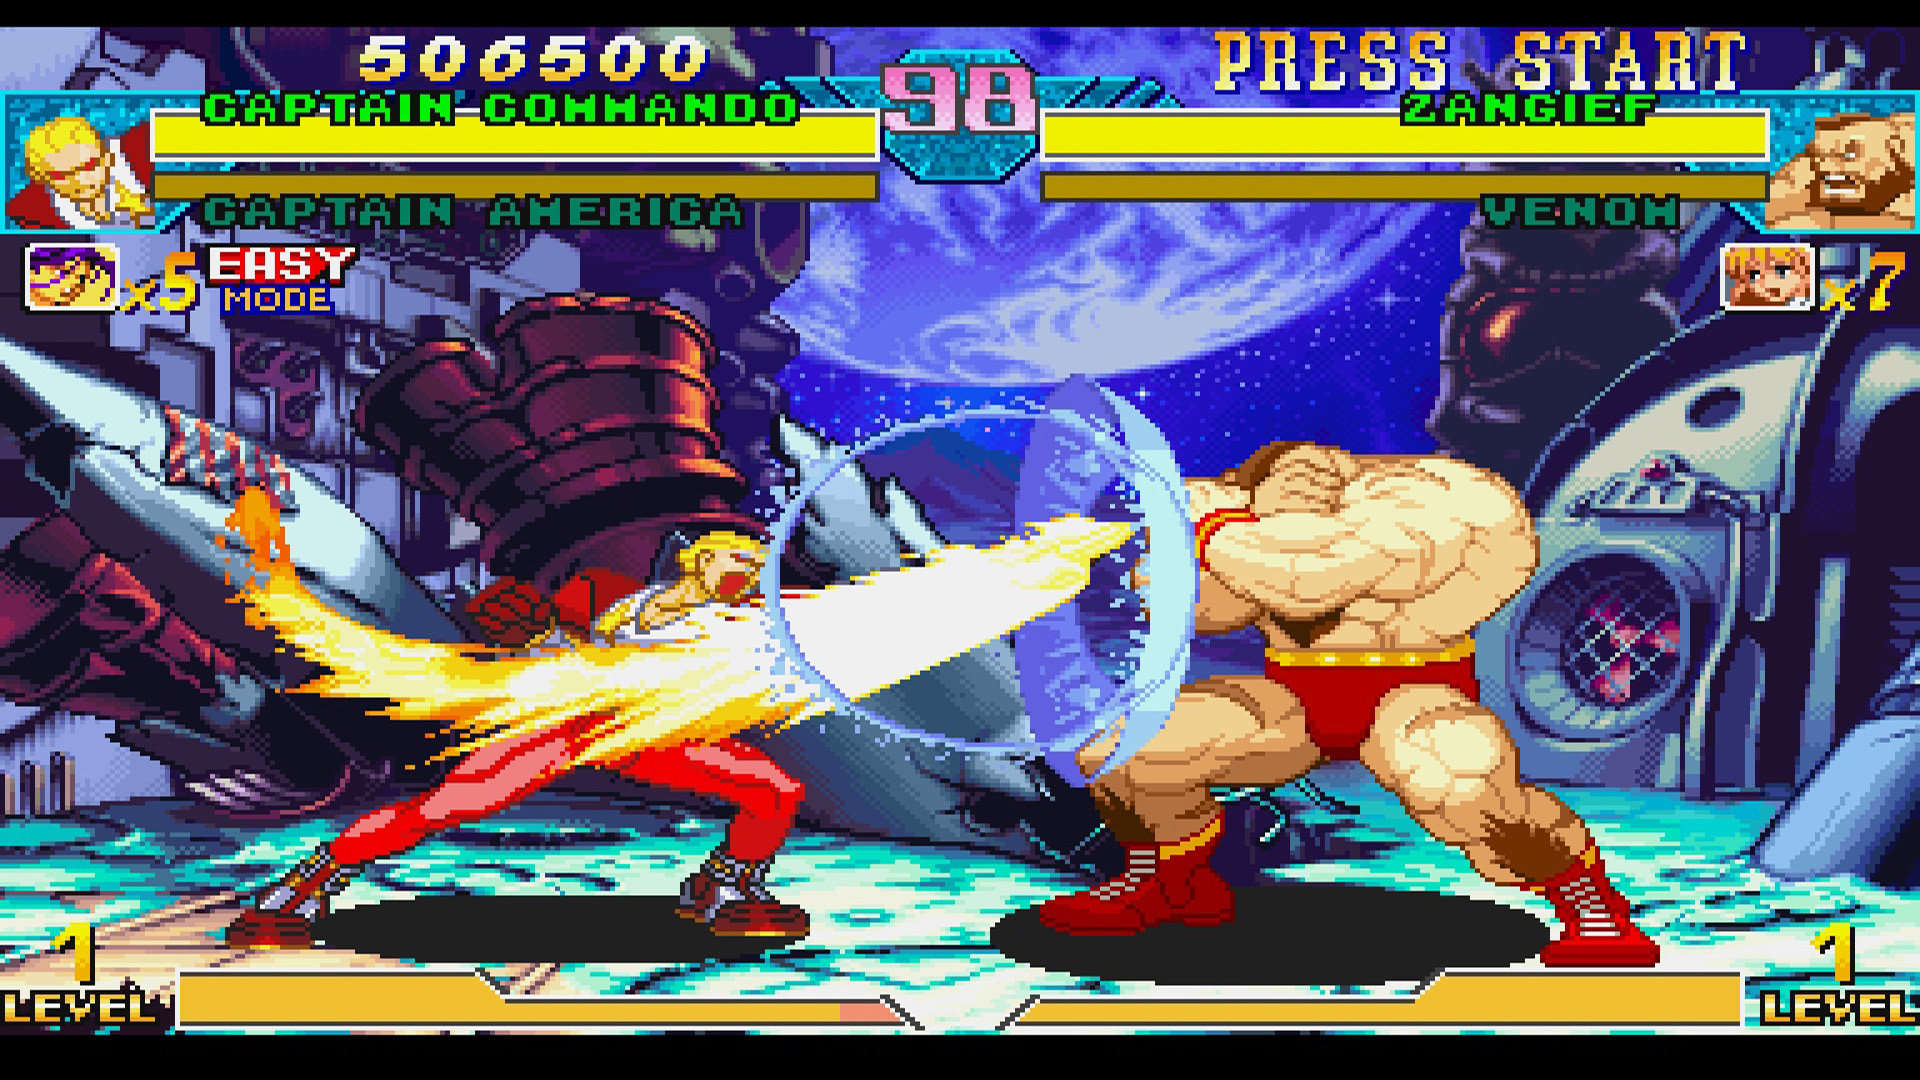 Marvel vs. Capcom: Clash of Super Heroes (USA) DC ISO.